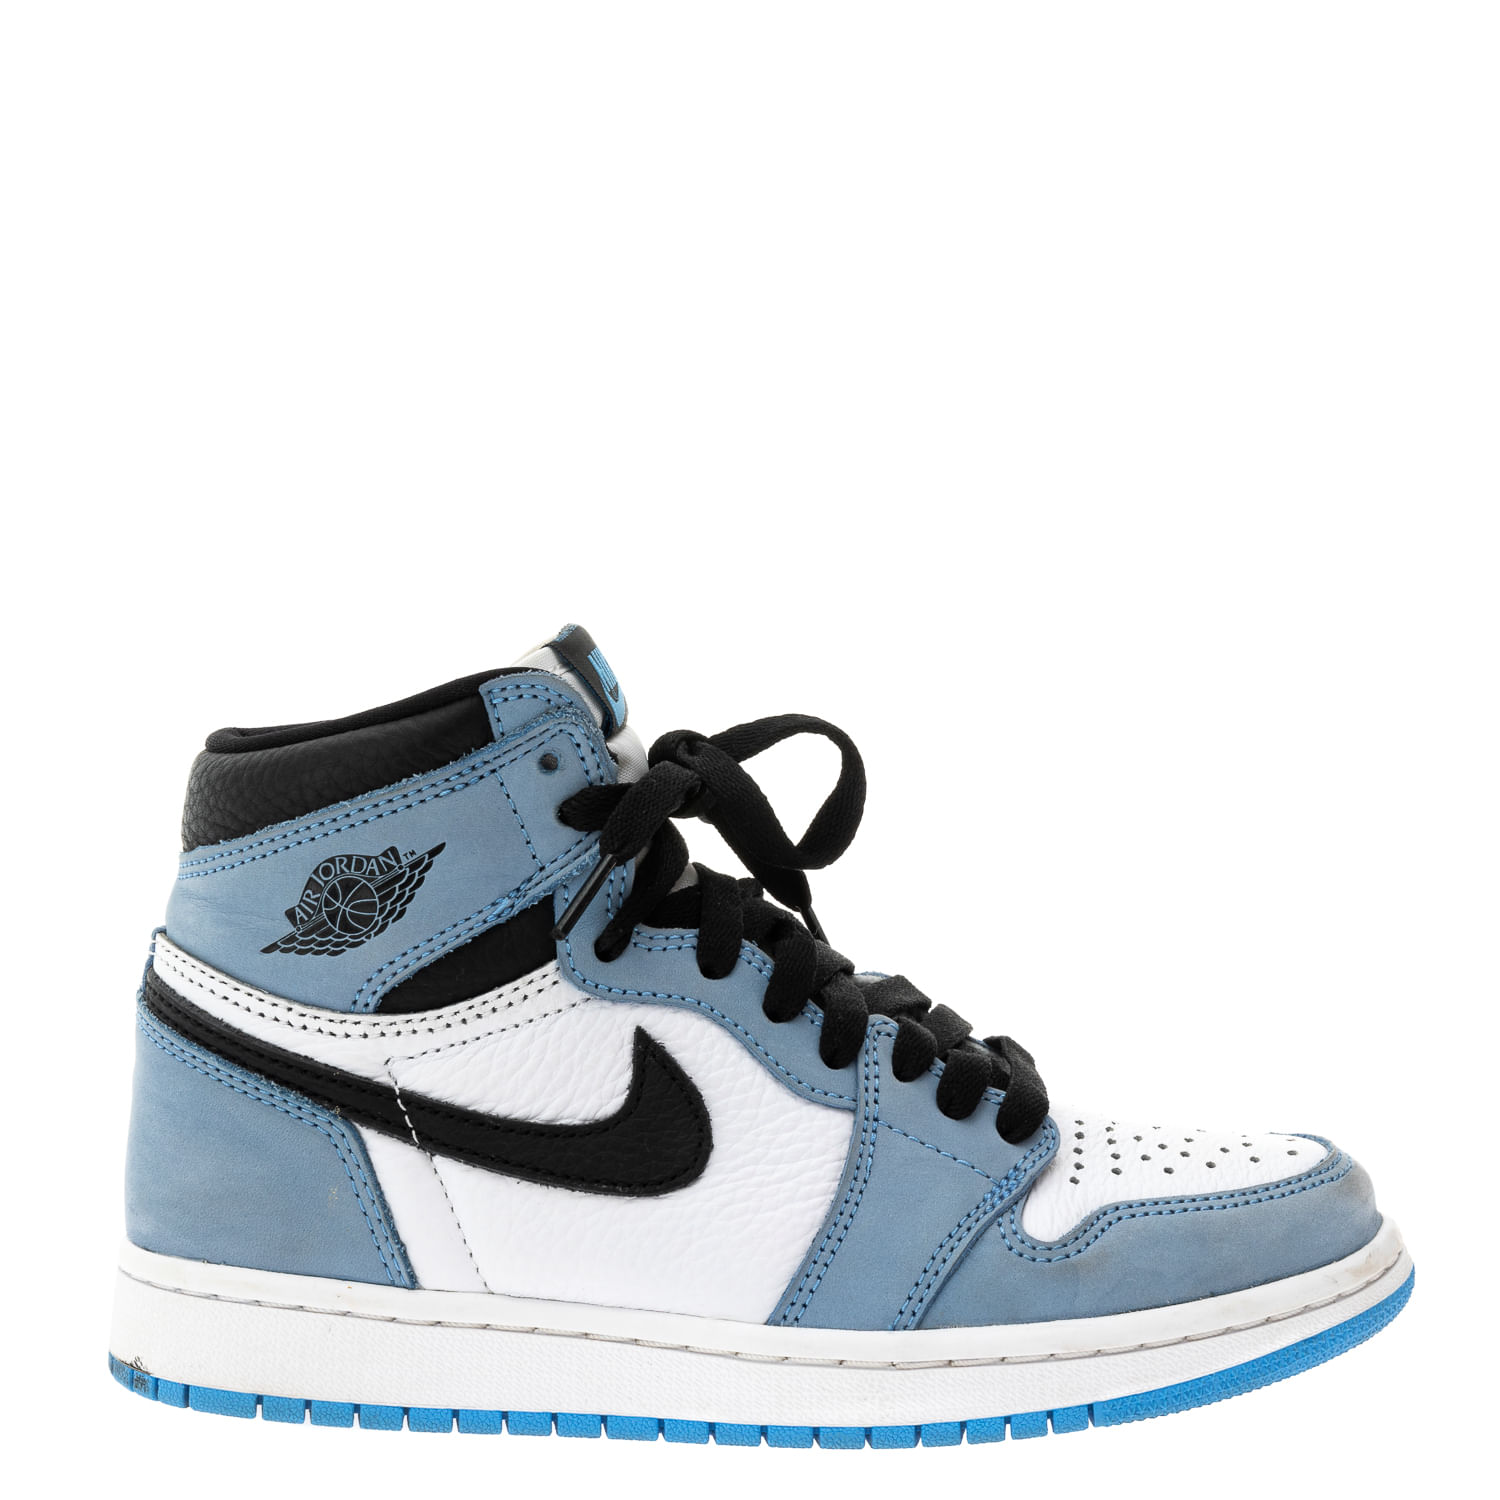 https://prettynew.vtexassets.com/arquivos/ids/288360/72710-Tenis-Nike-Air-Jordan-1-Branco-e-Azul-1.jpg?v=638231489264600000